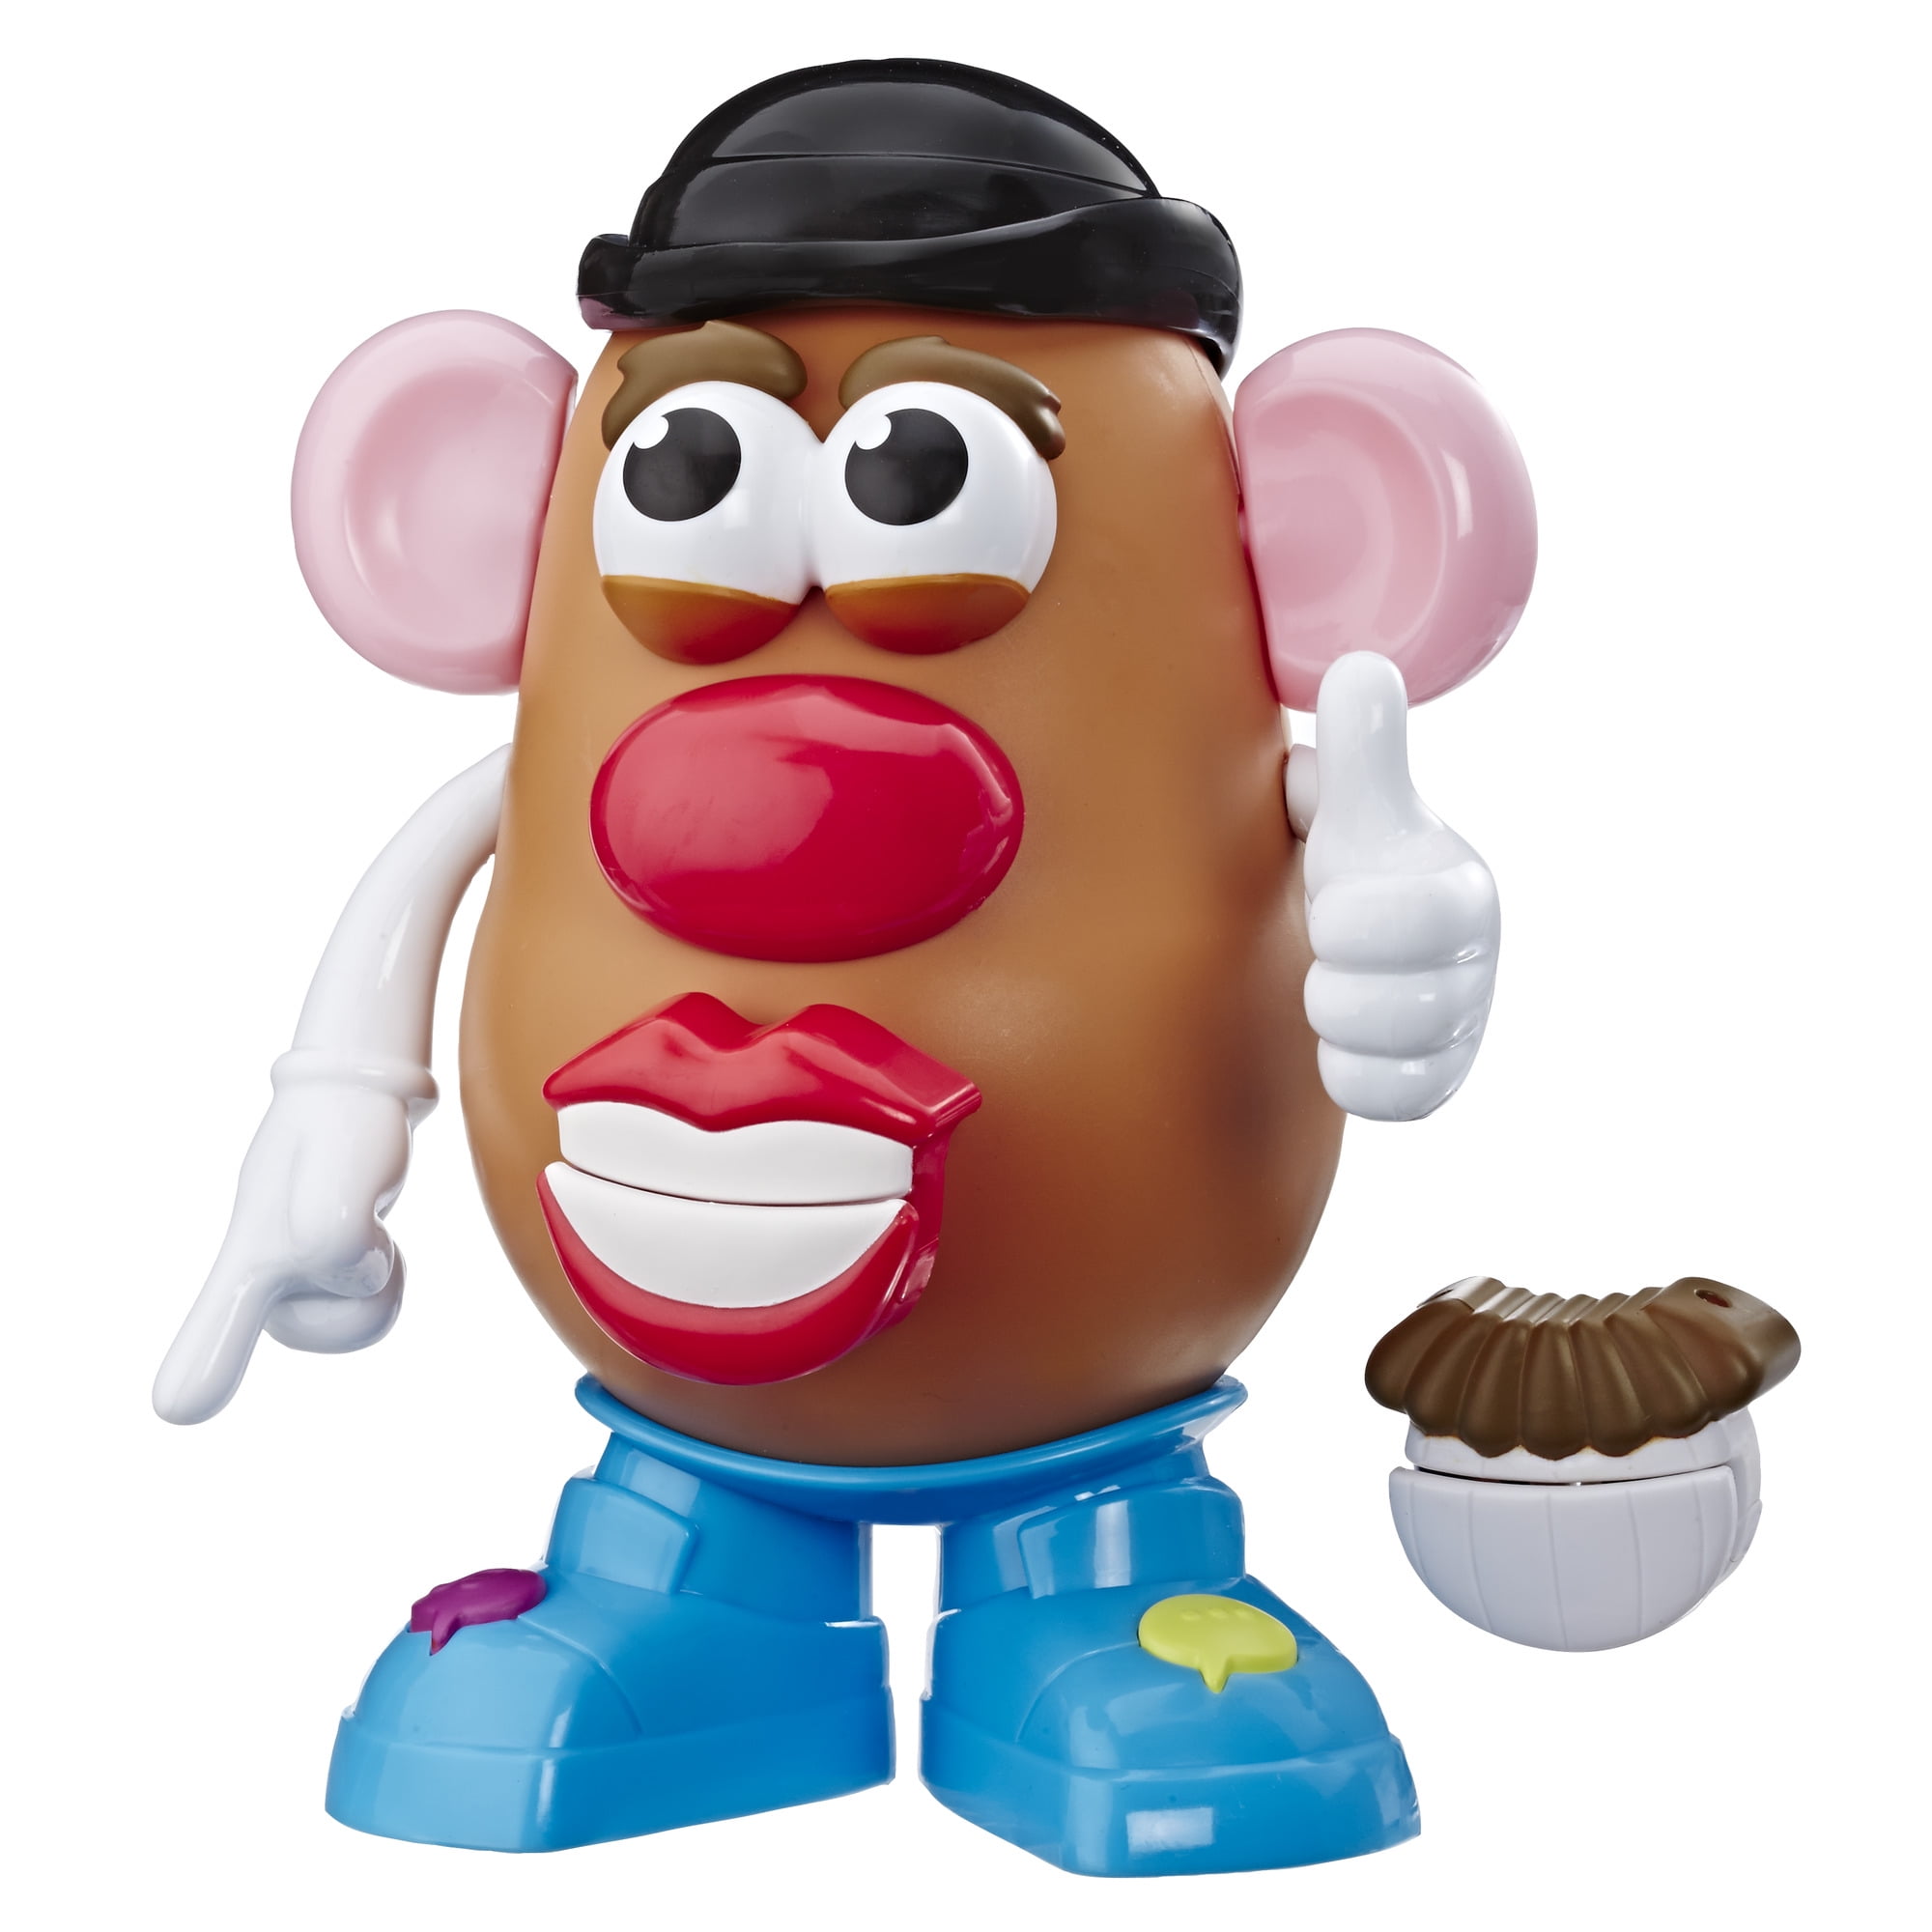 B1006 Potato Head Pirate Spud Figure for sale online Playskool Mr 